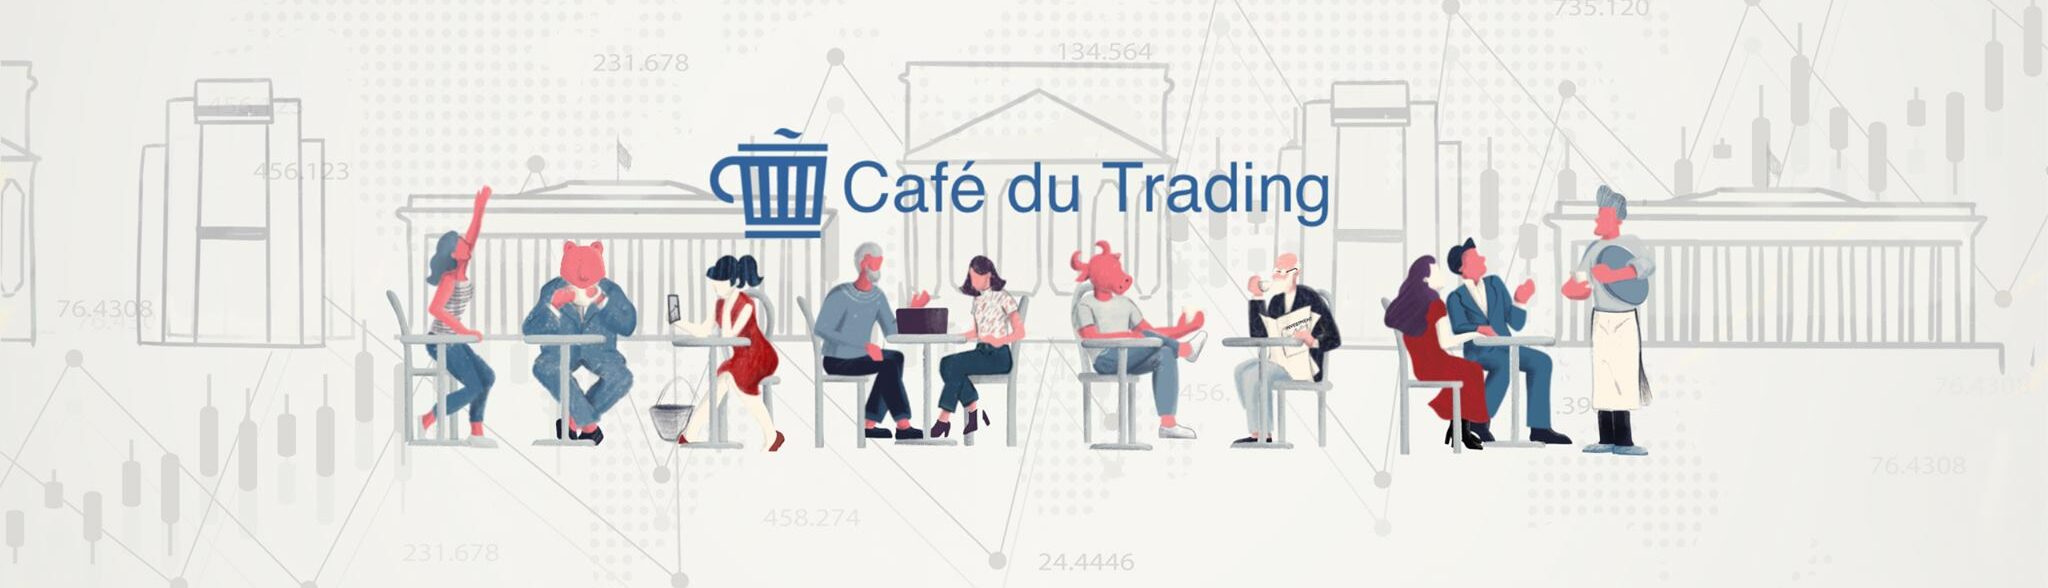 Newsletter Cafe du Trading